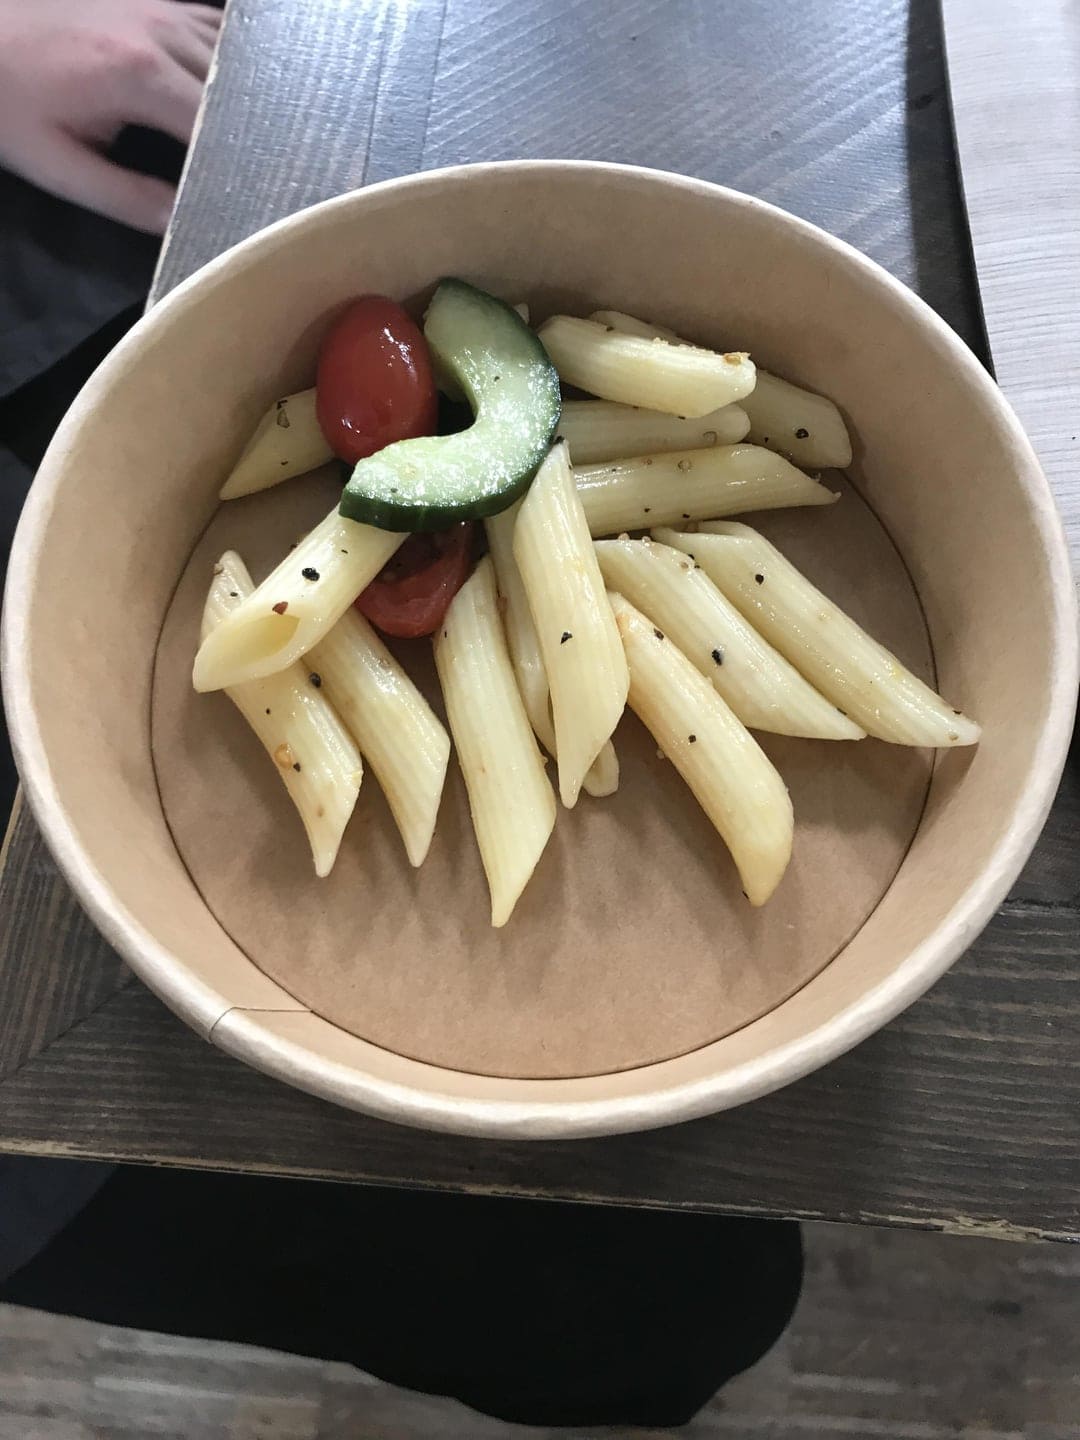 Салат с макаронами за 3 доллара, заказанный в аэропорту